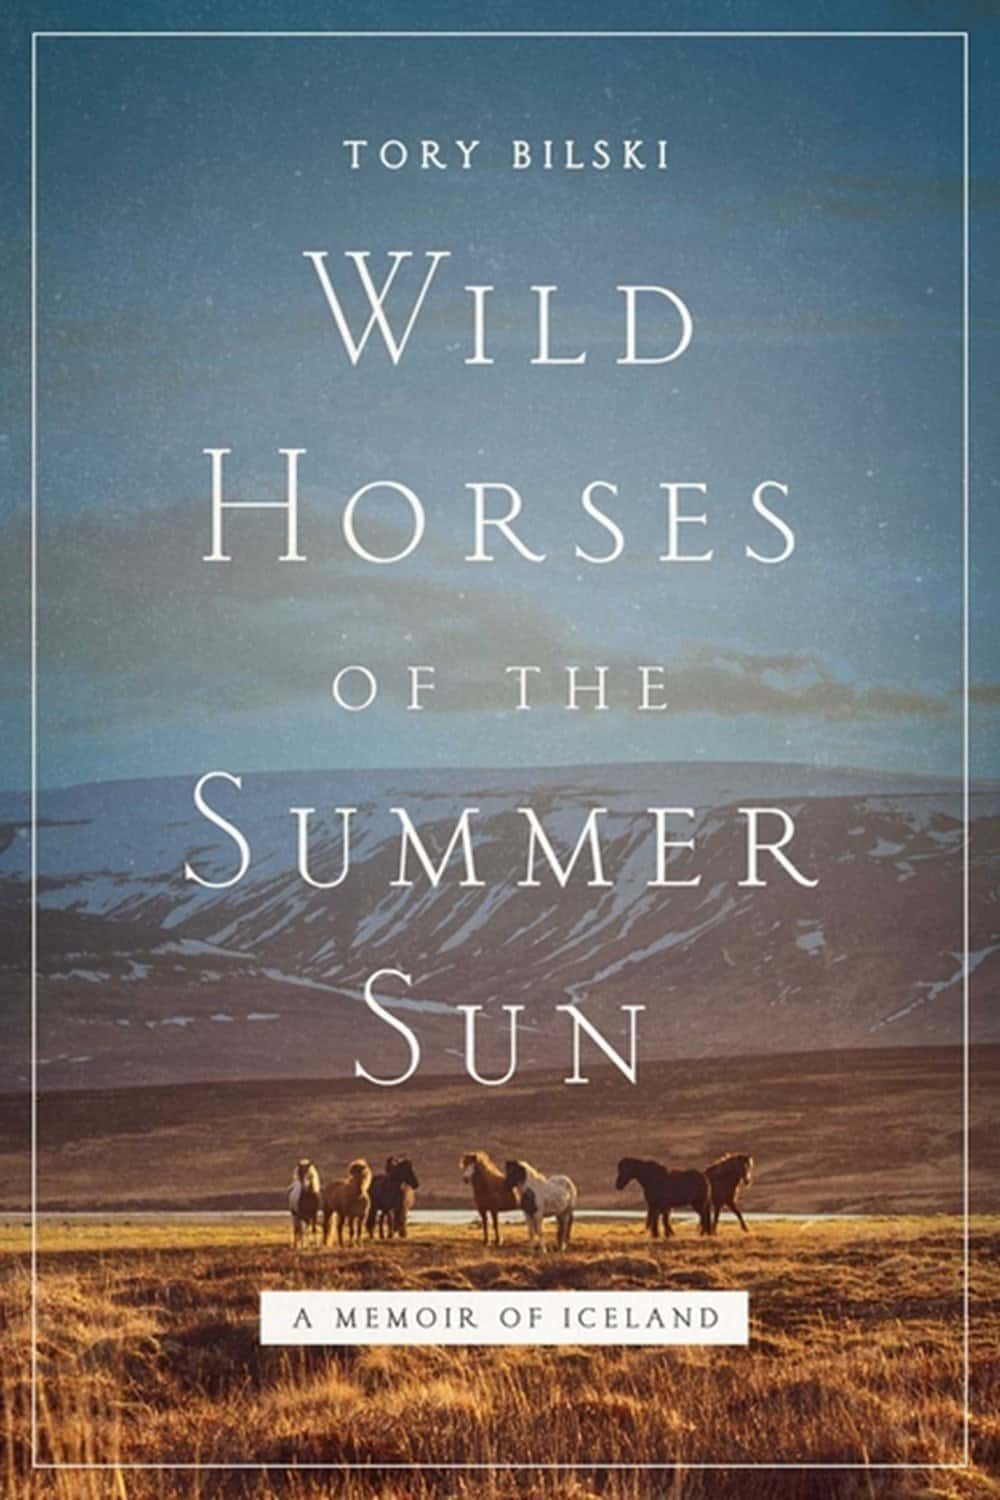 Wild Horses of the Summer Sun – A Memoir of Iceland by Tory Bilski